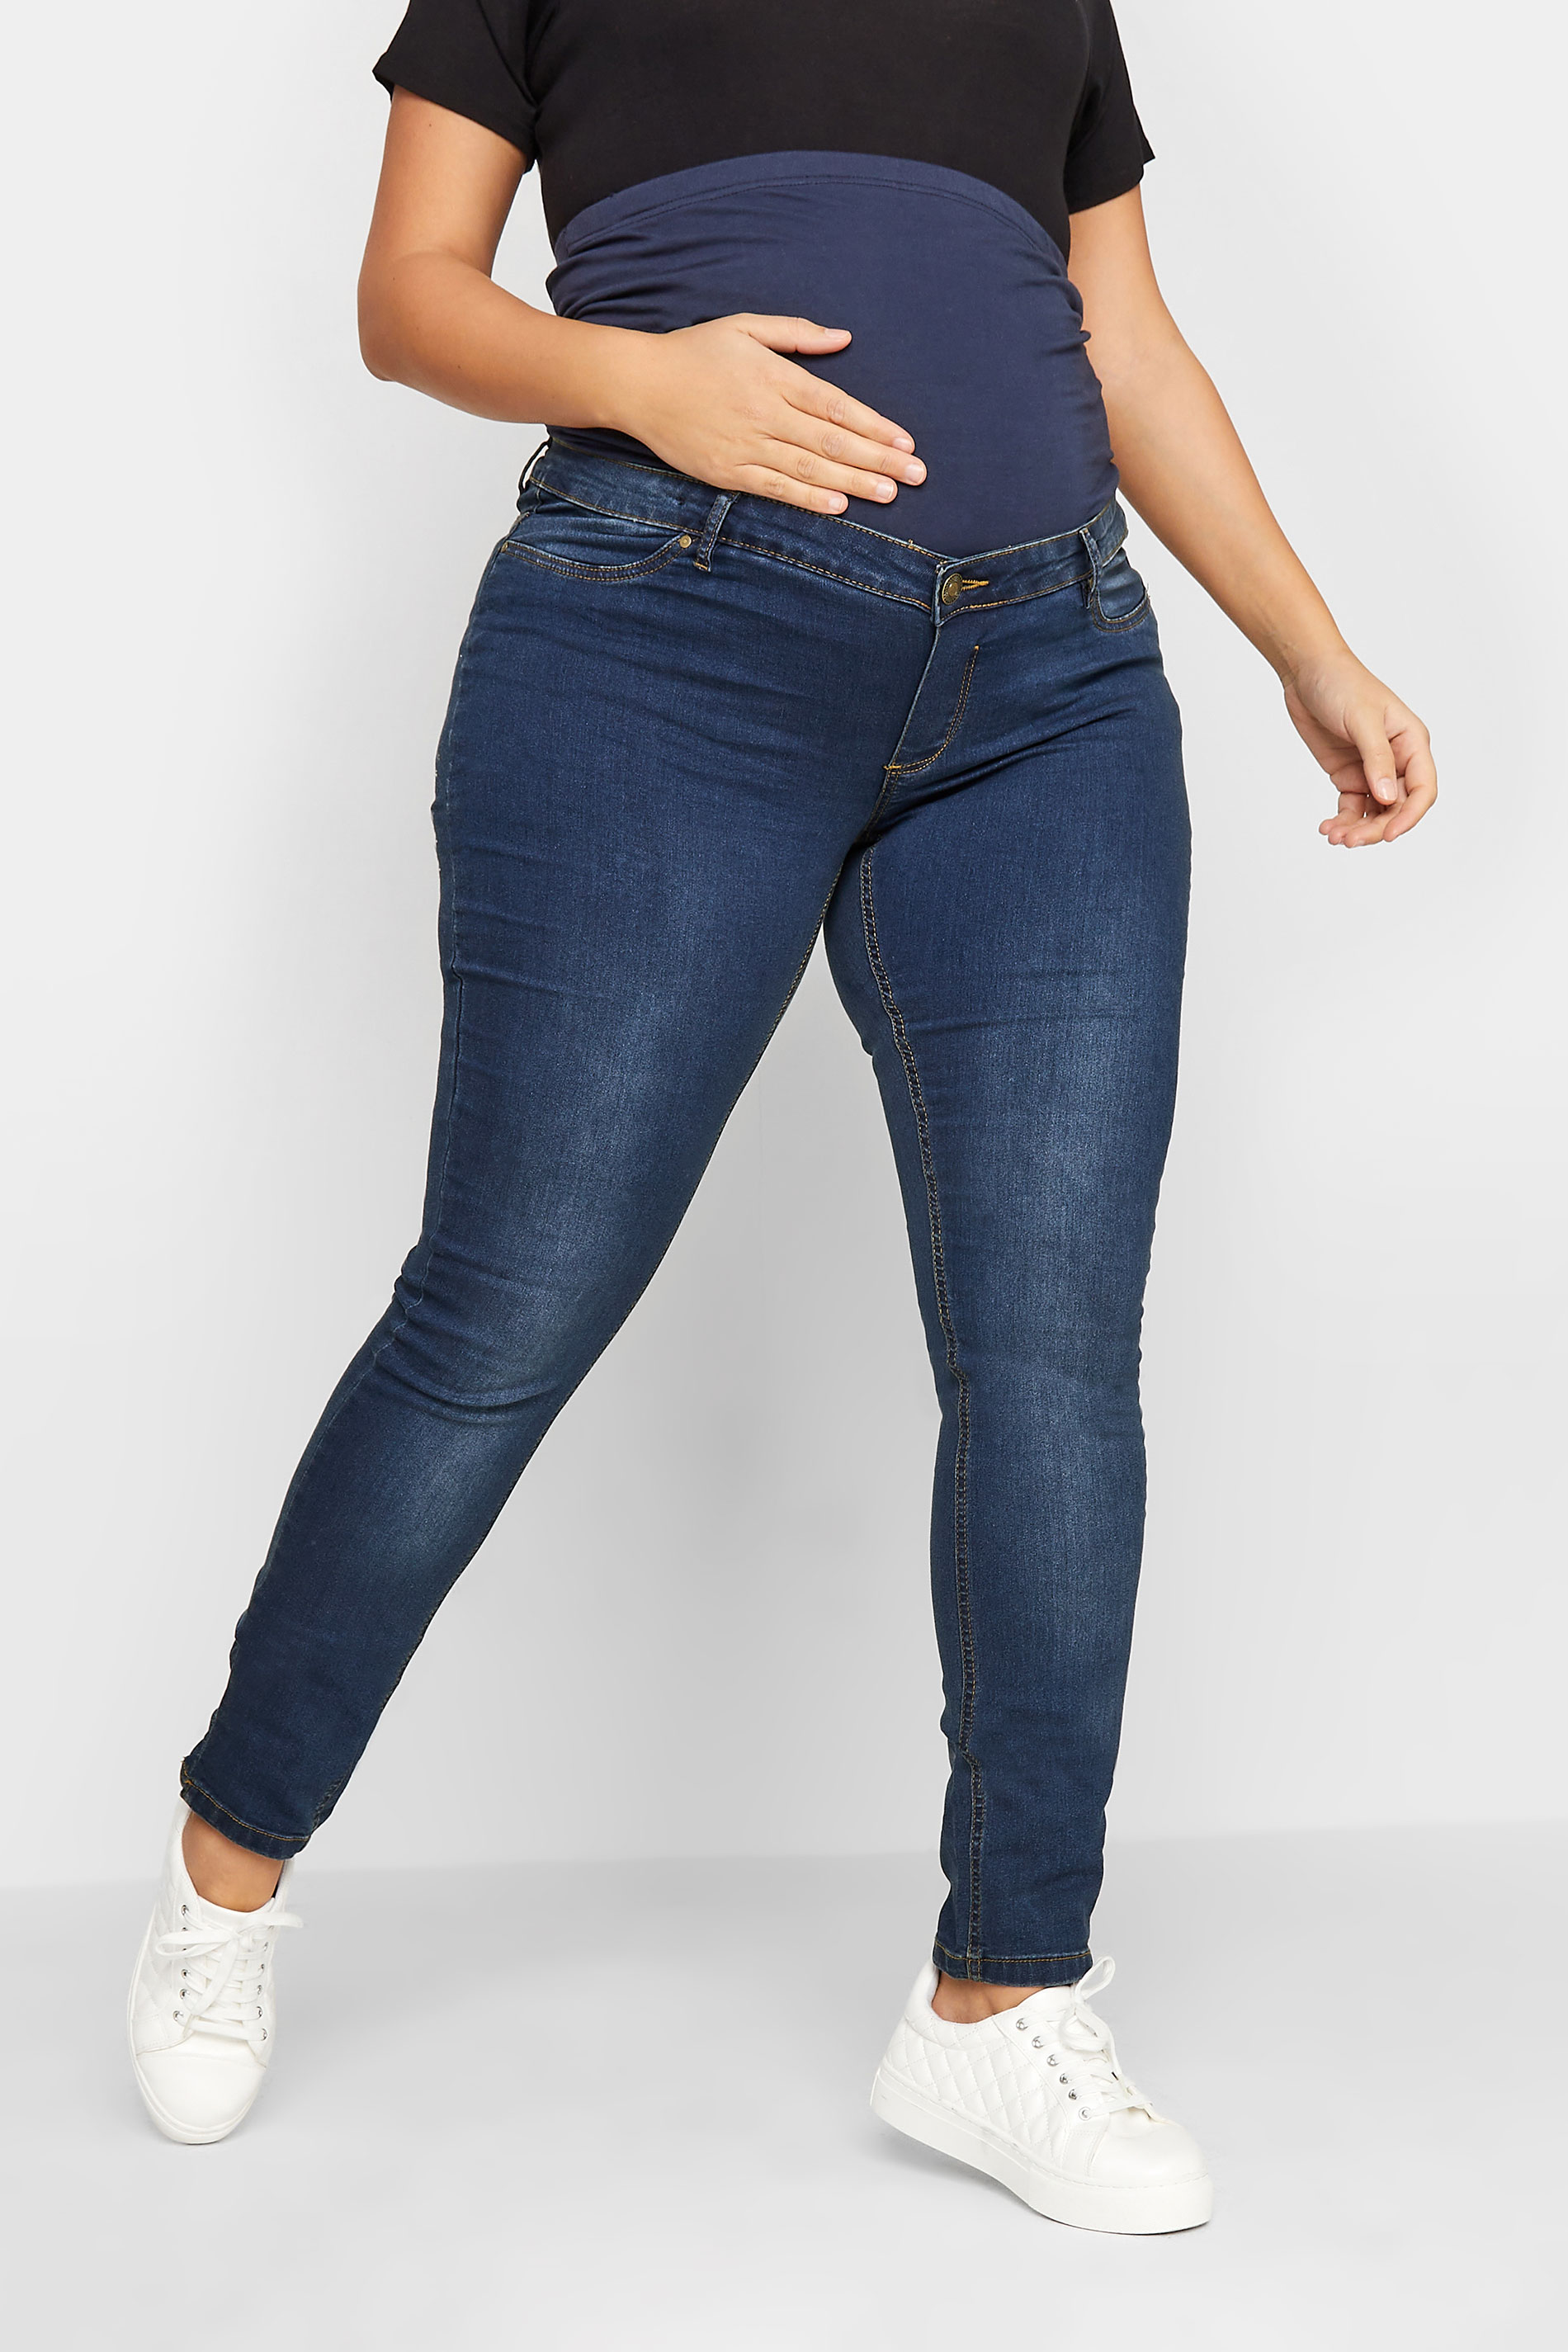 Tall Women's LTS Maternity Blue Skinny Jeans | Long Tall Sally 1